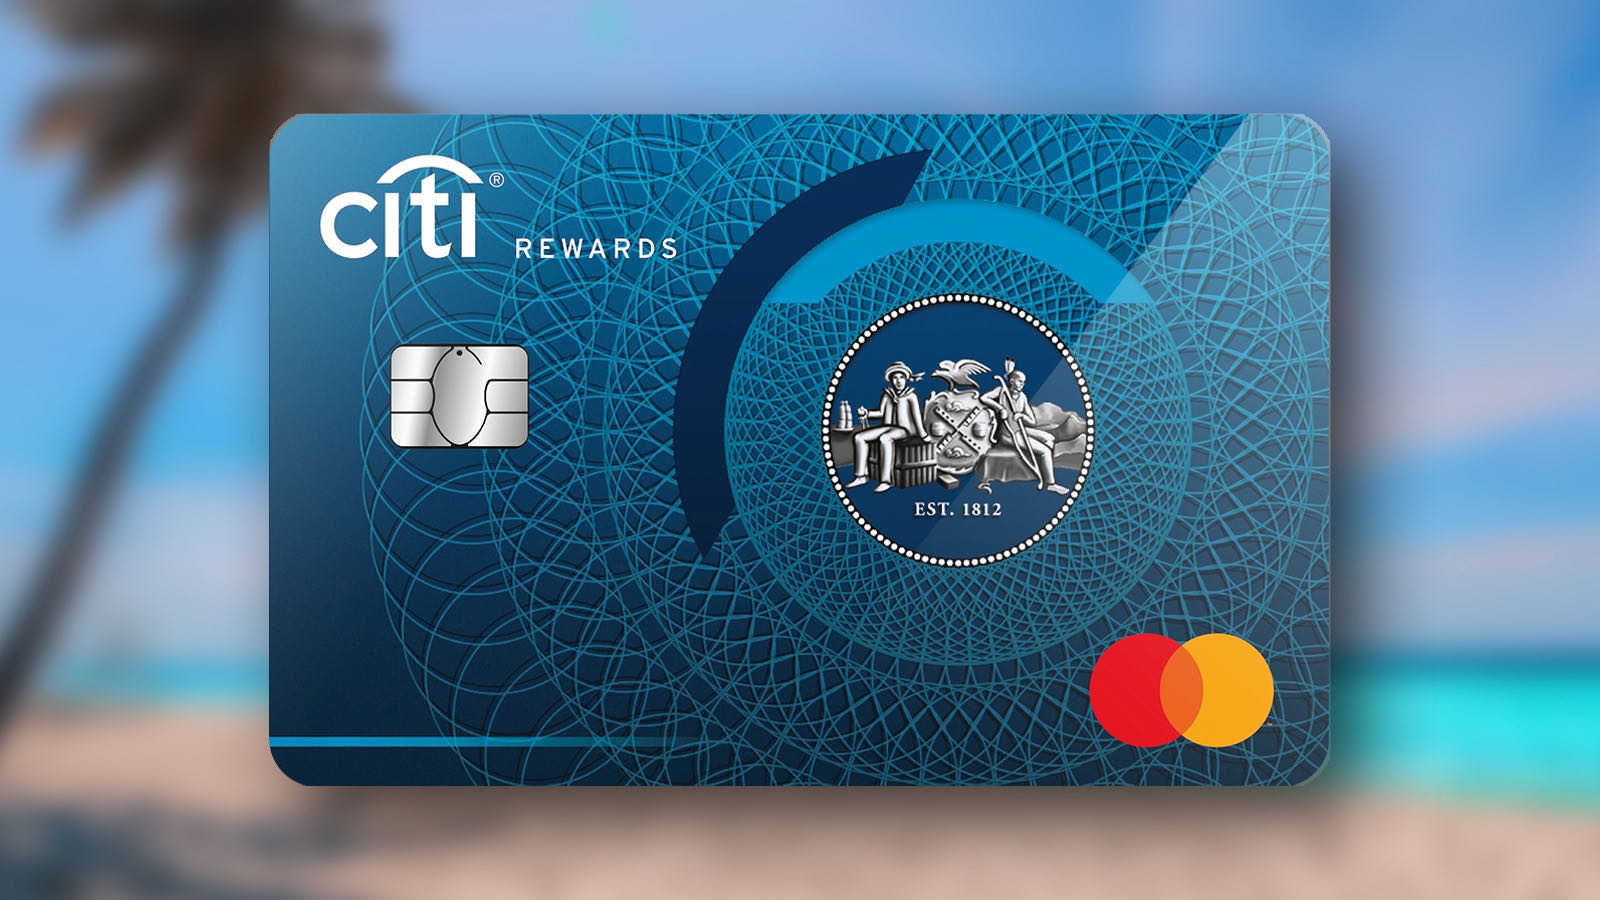 Citi Reward credit card Point Hacks Review